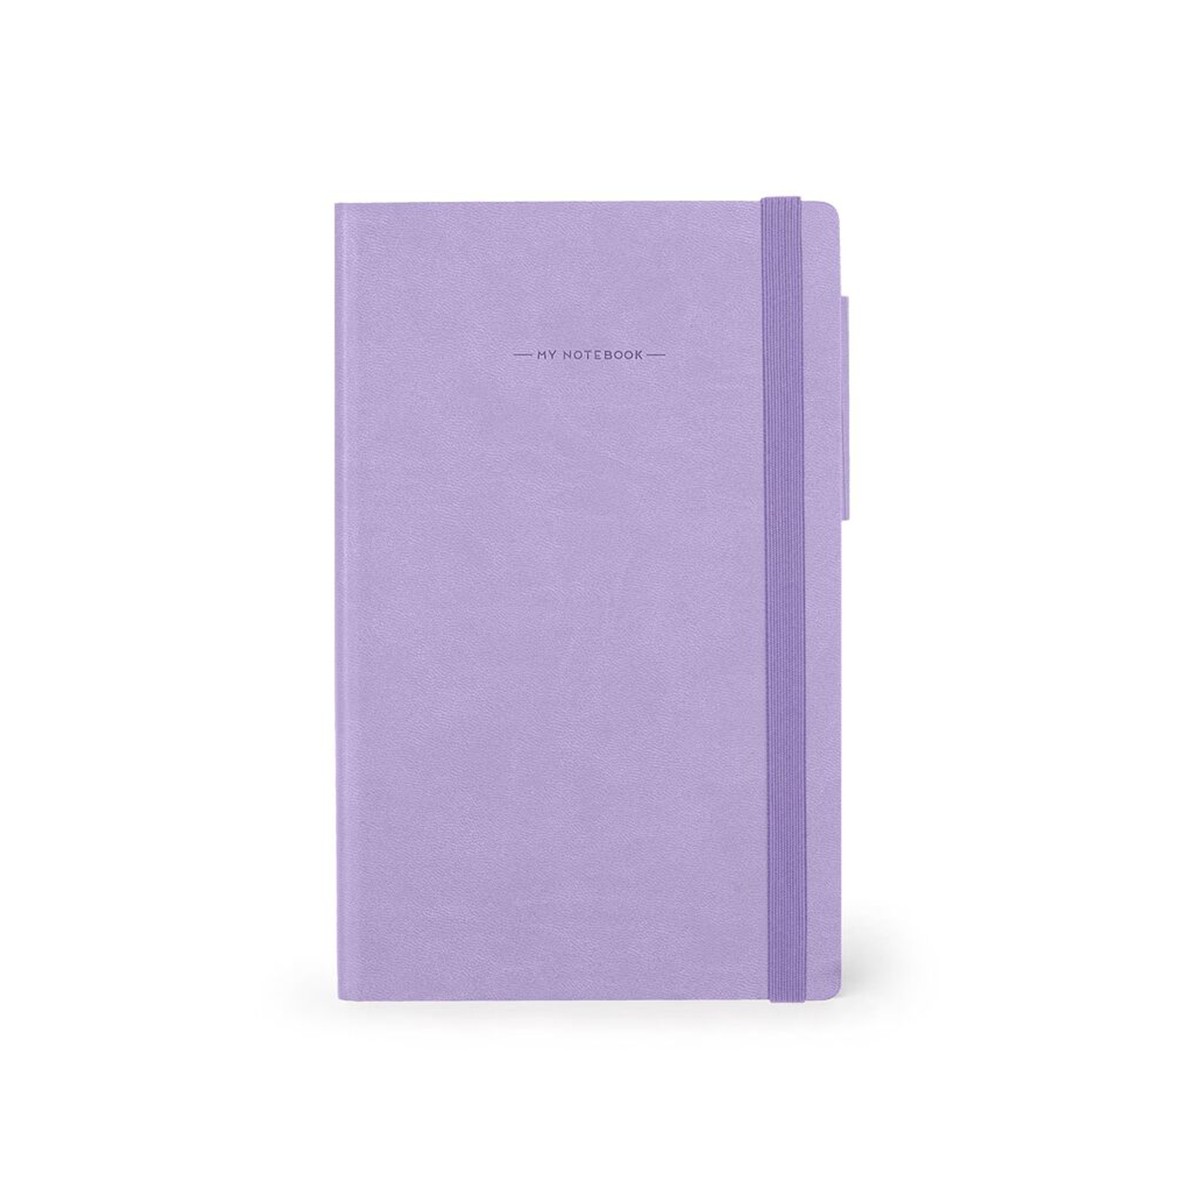 LEGAMI Σημειωματάριο My Notebook Medium Μωβ - Ριγέ